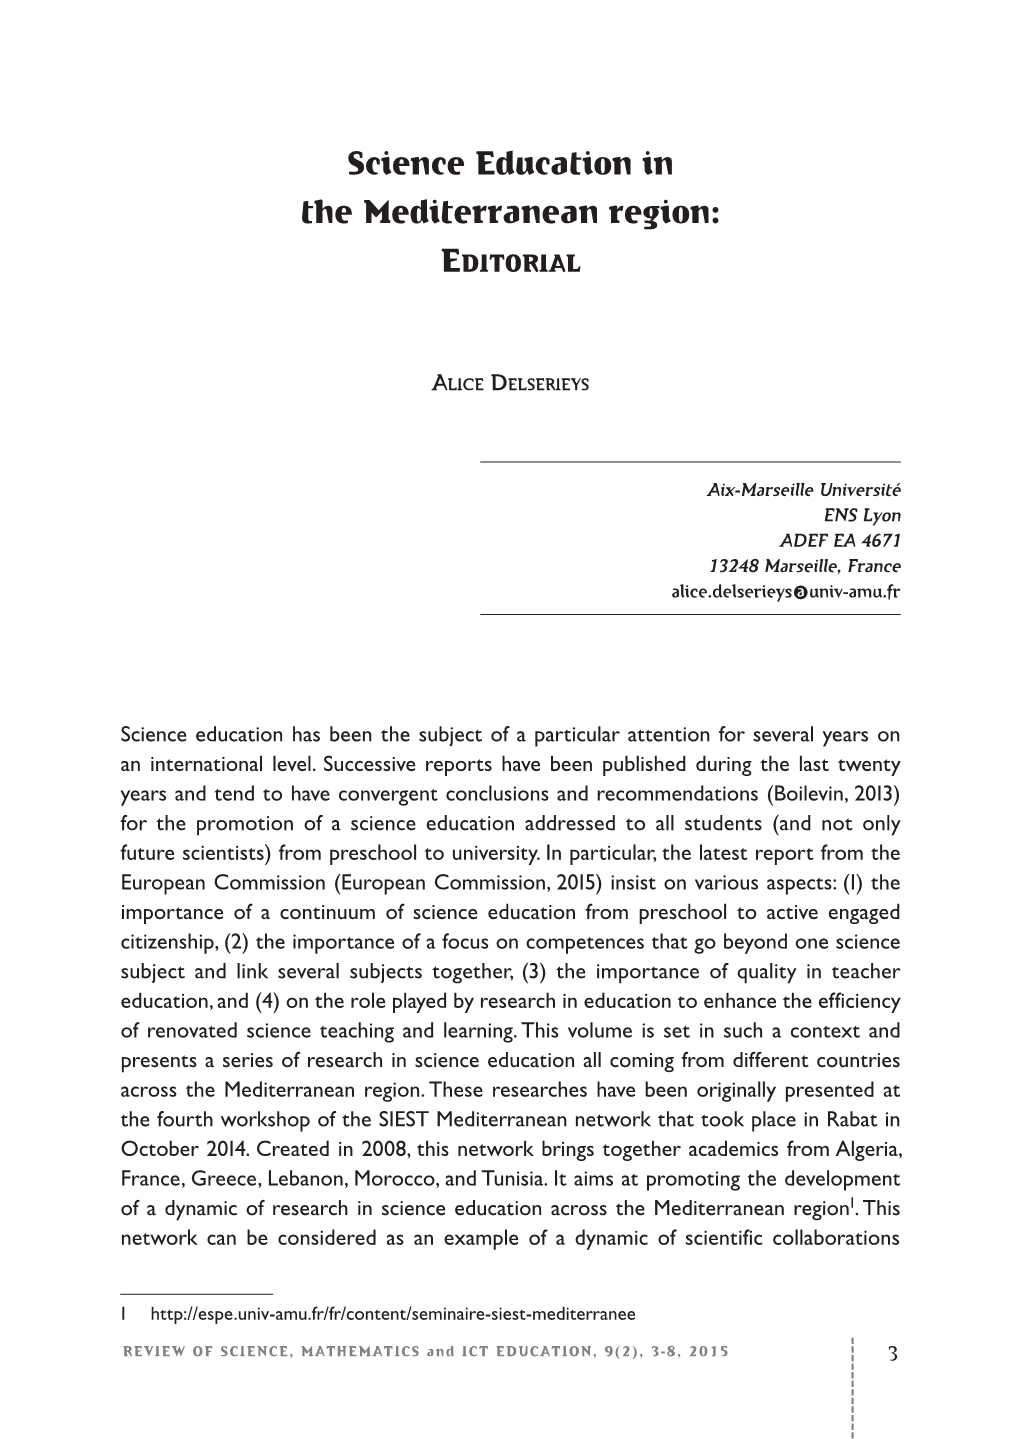 Science Education in the Mediterranean Region: Editorial